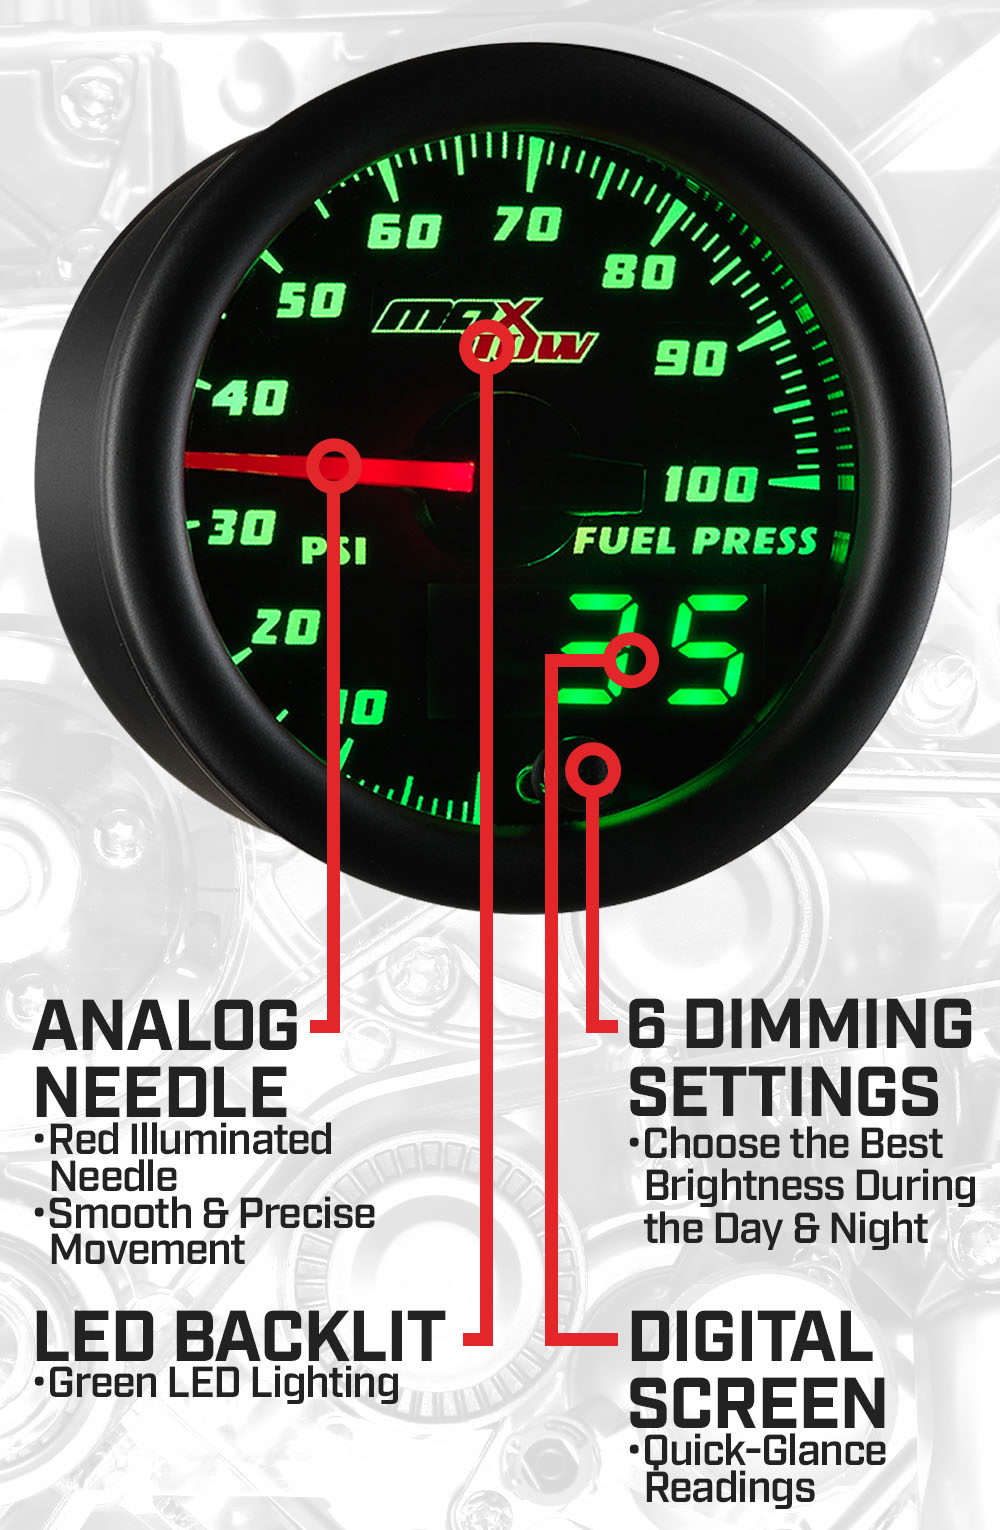 Black & Green Double Vision 100 PSI Fuel Pressure Gauge Features